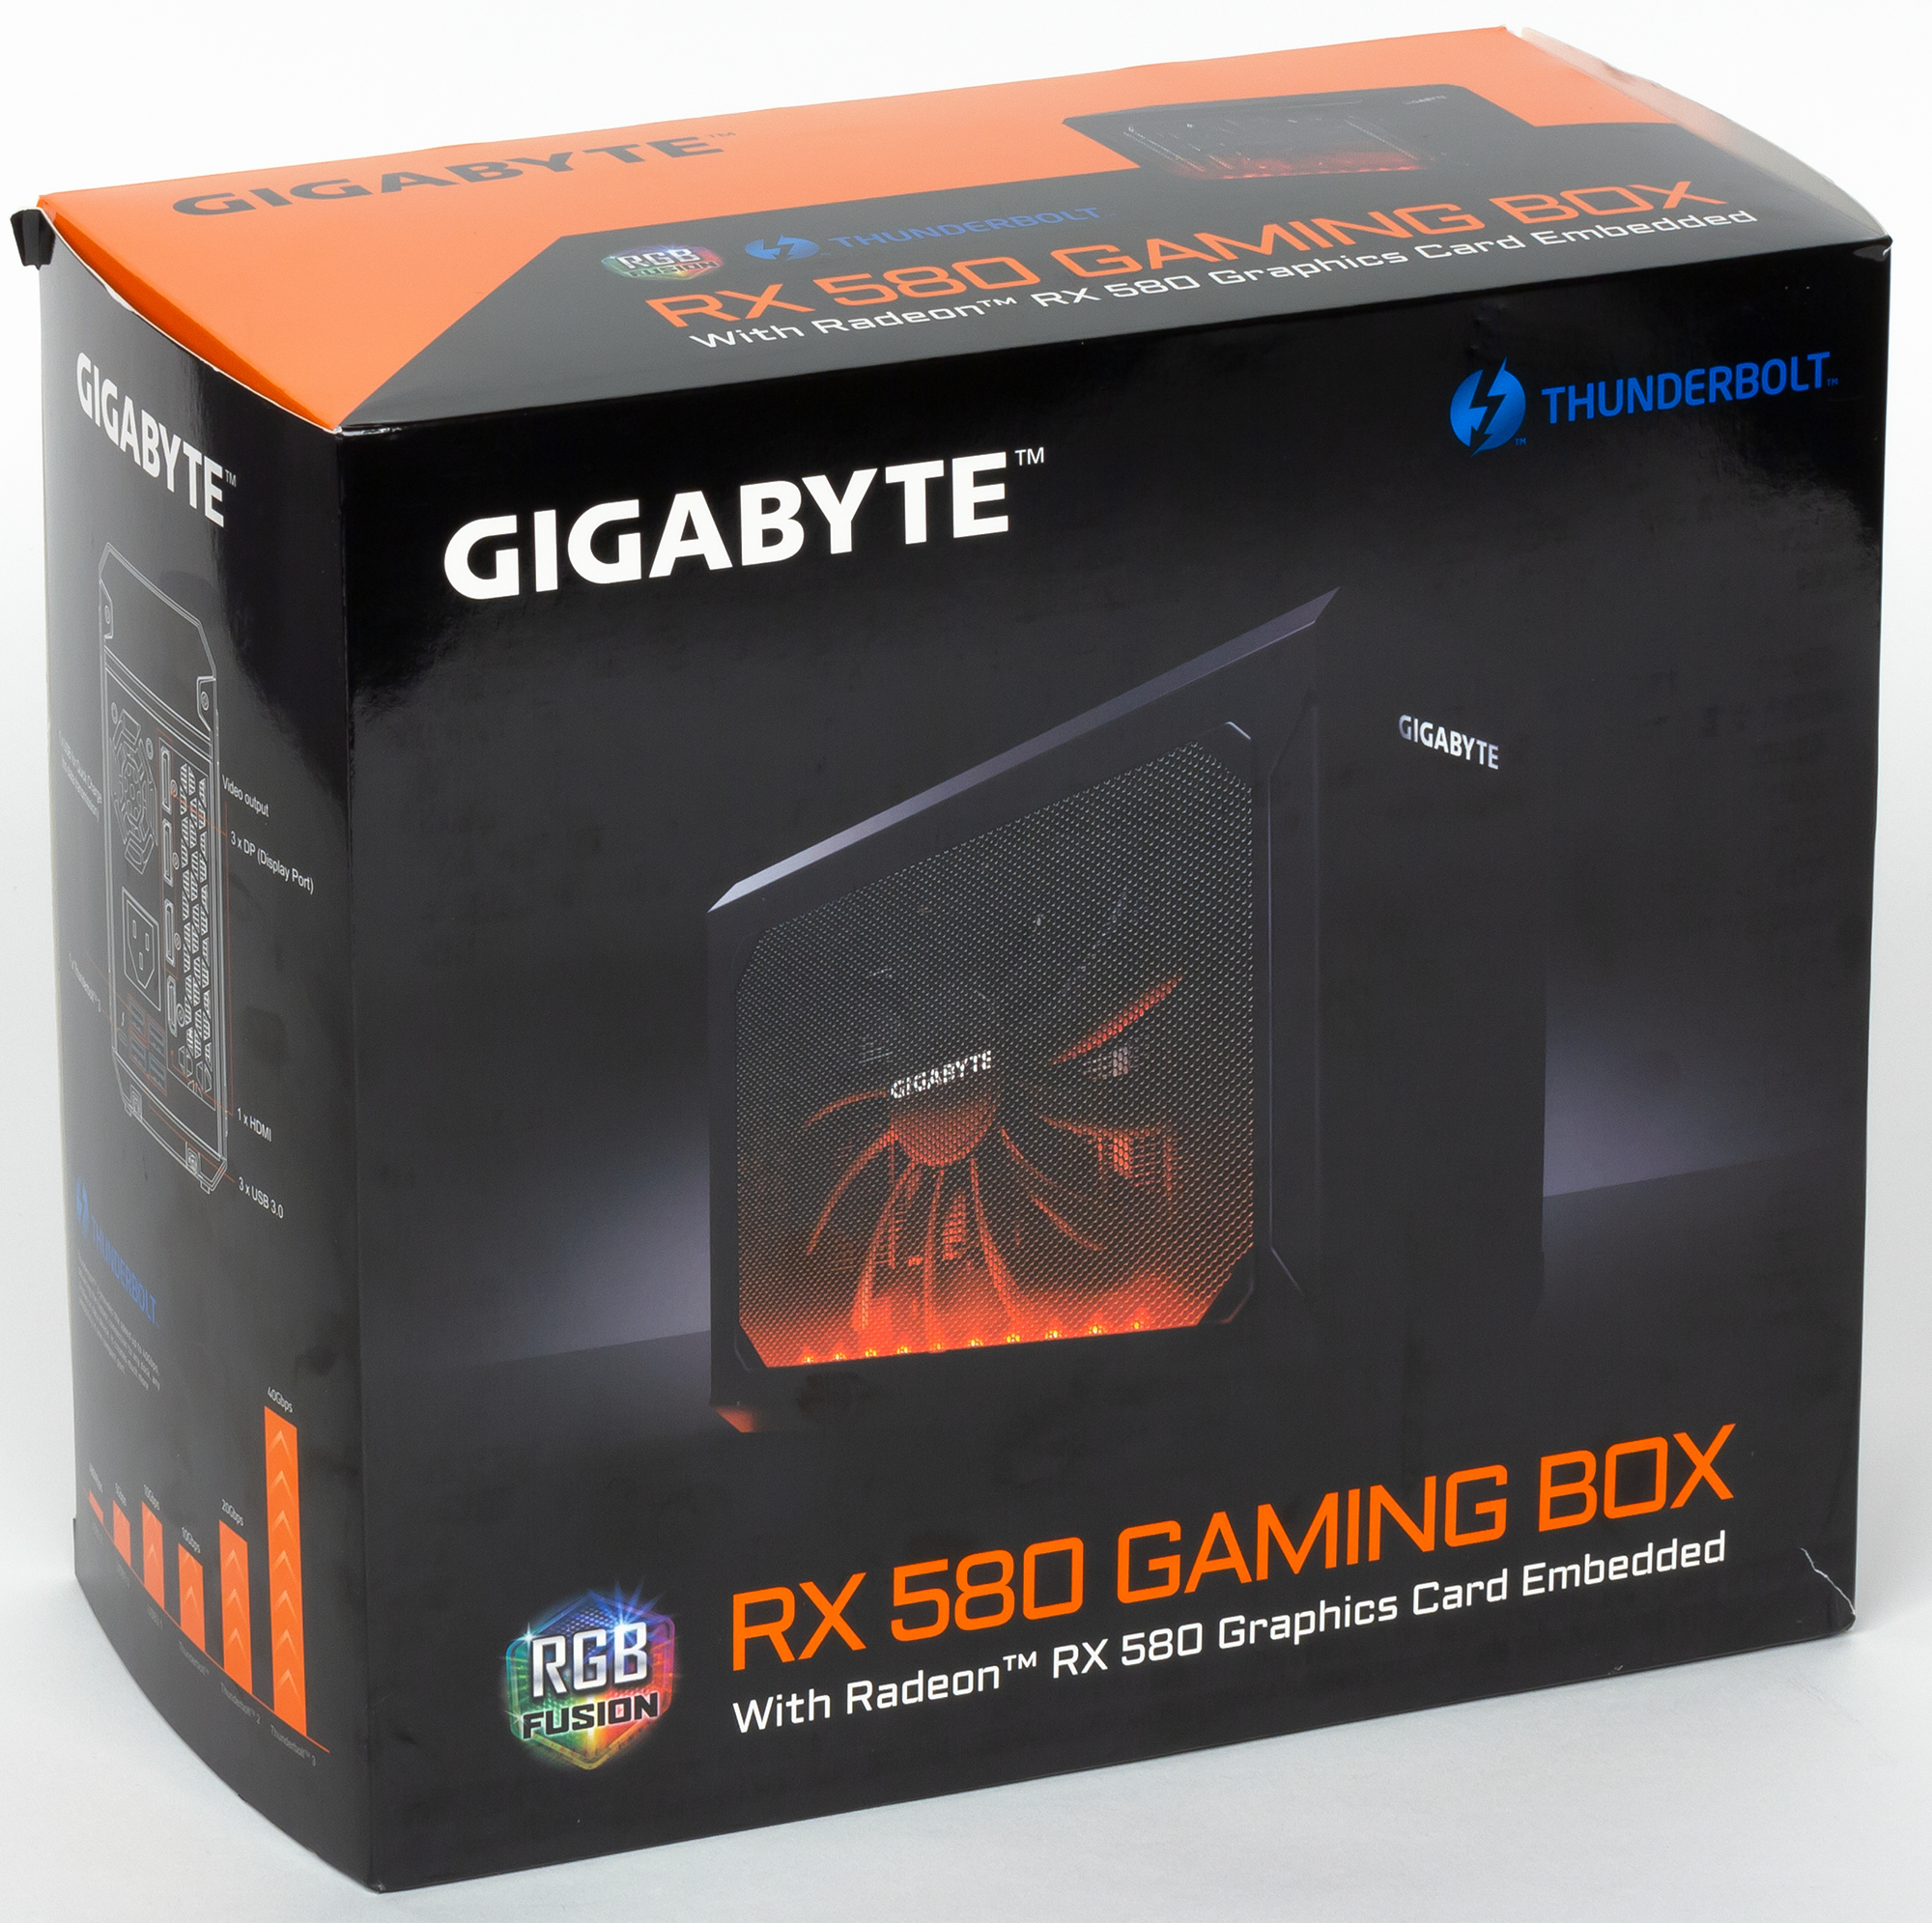 RX 580 Gigabyte. Gigabyte RX 580 Gaming Box. Внешняя видеокарта Thunderbolt. Внешний блок для видеокарты.